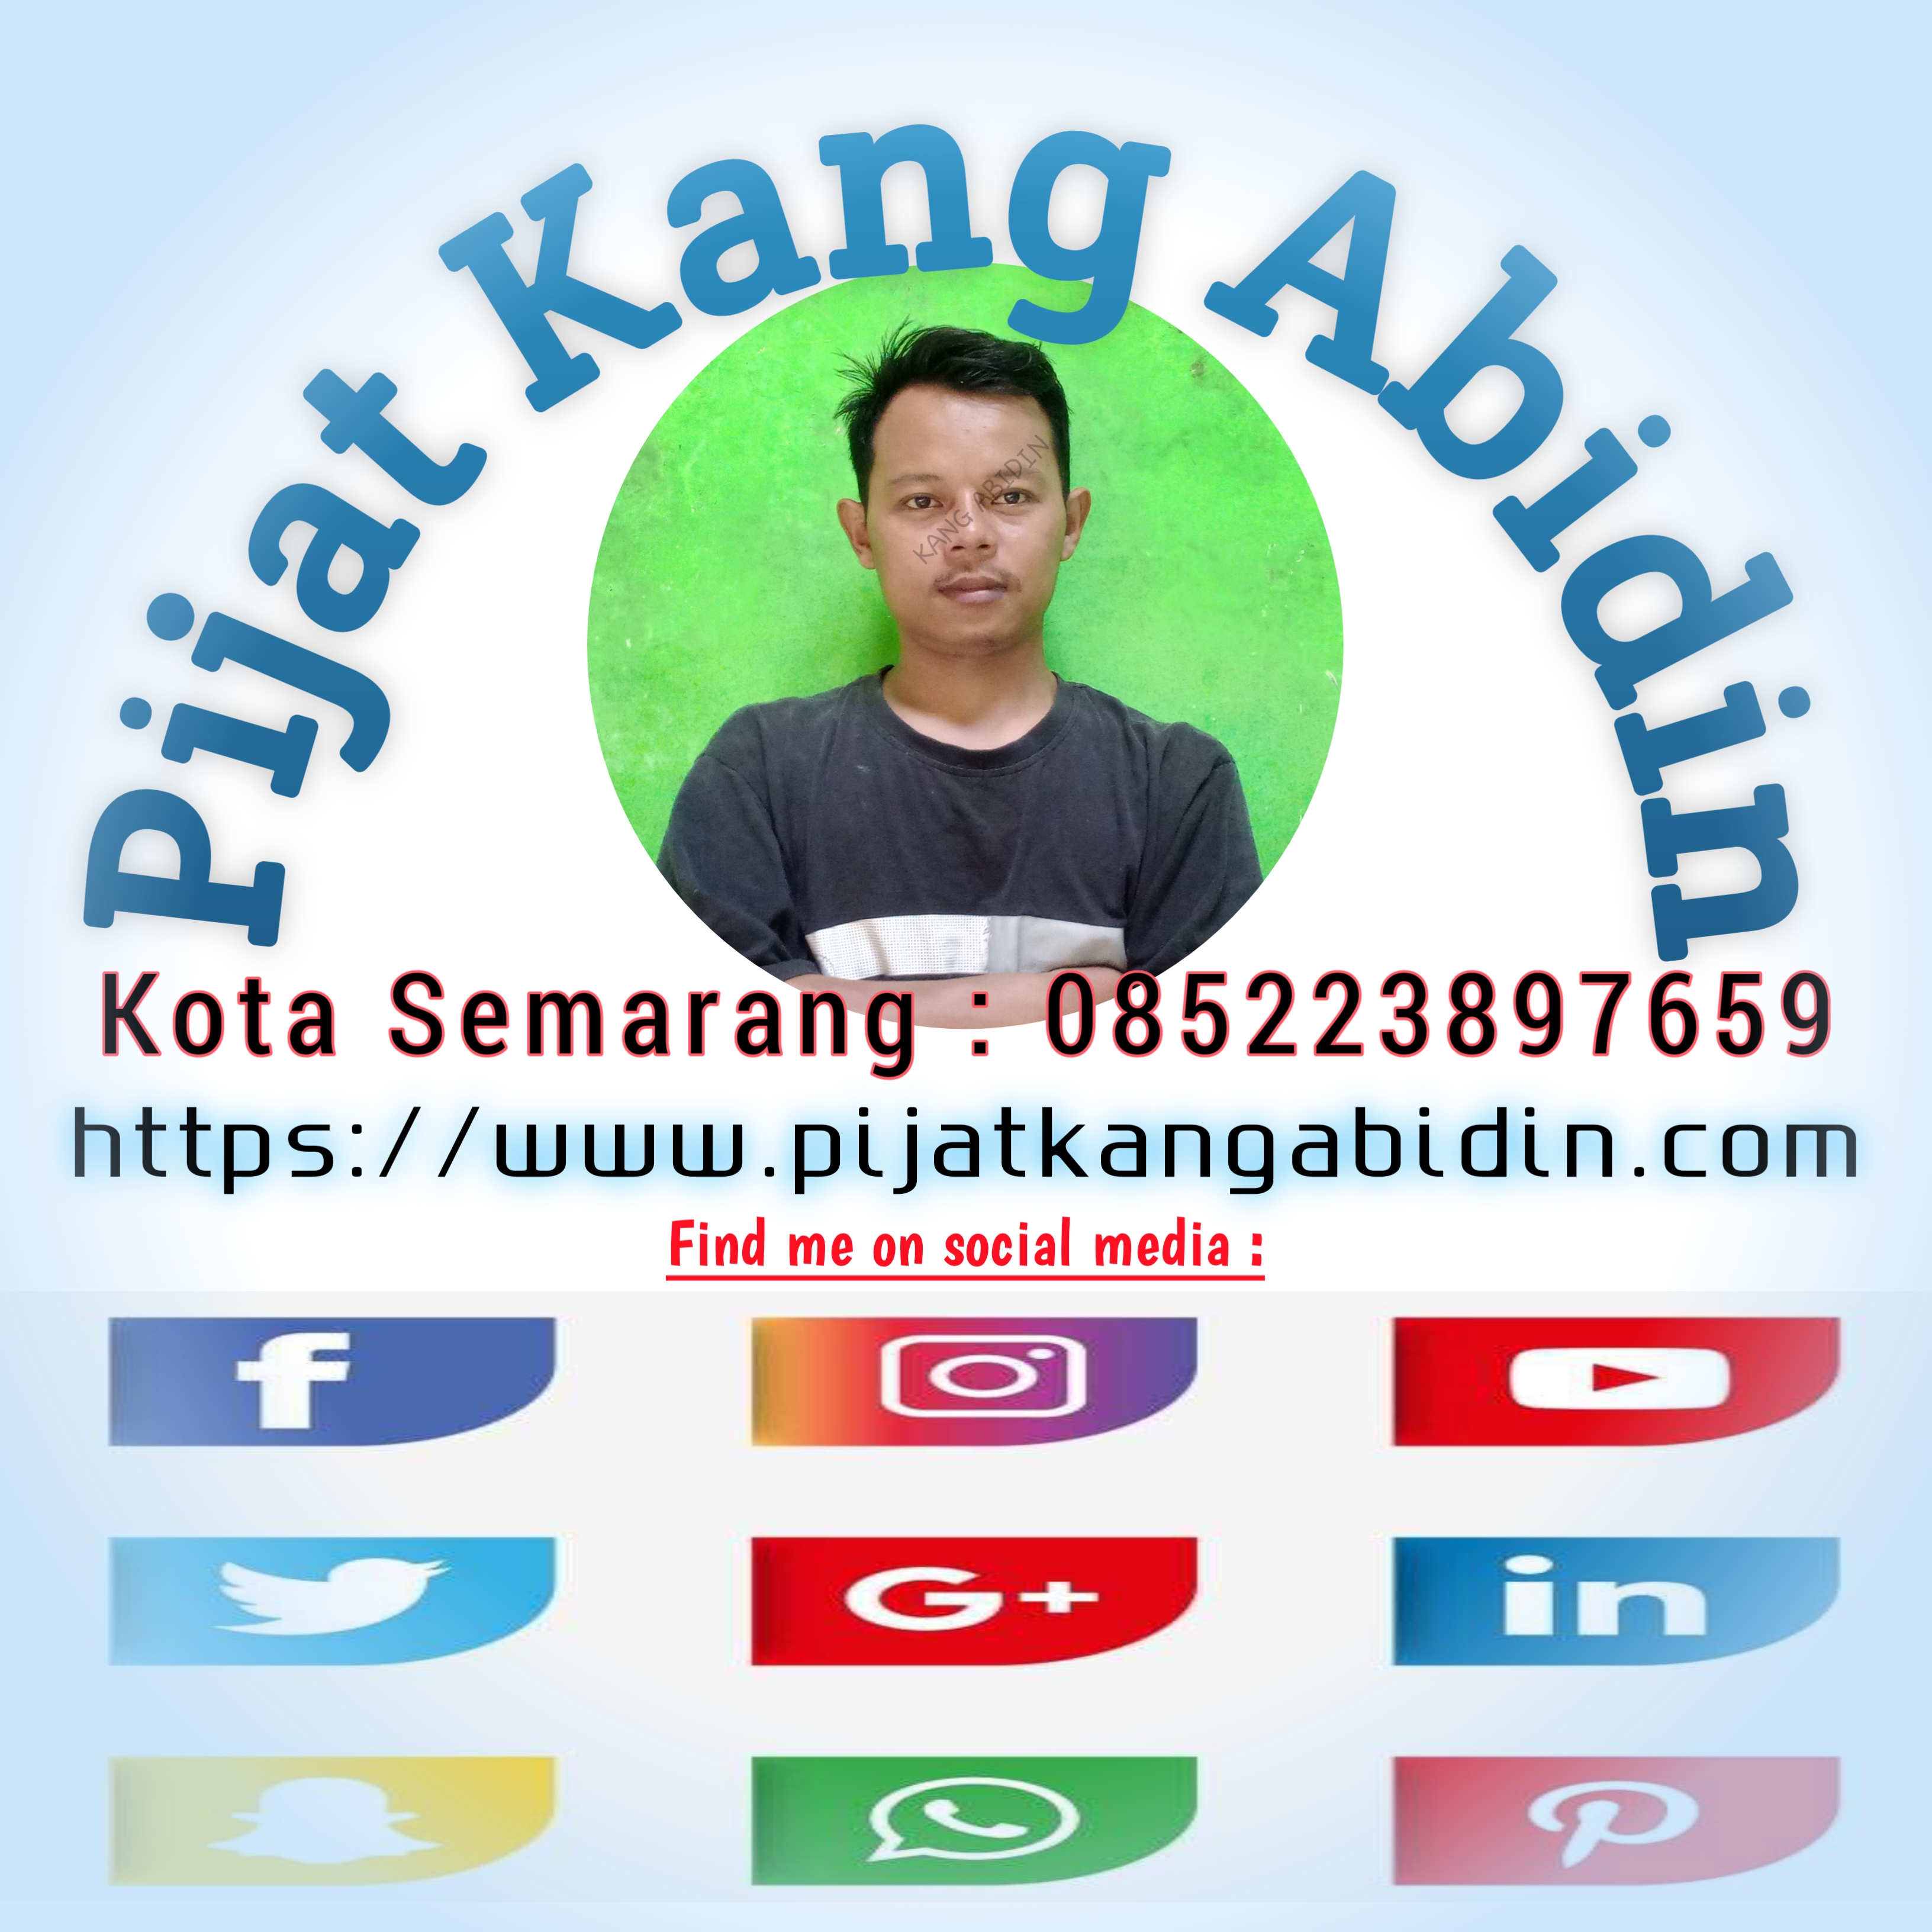 https://www.ptjatkangabidin.com

Find me on social media: